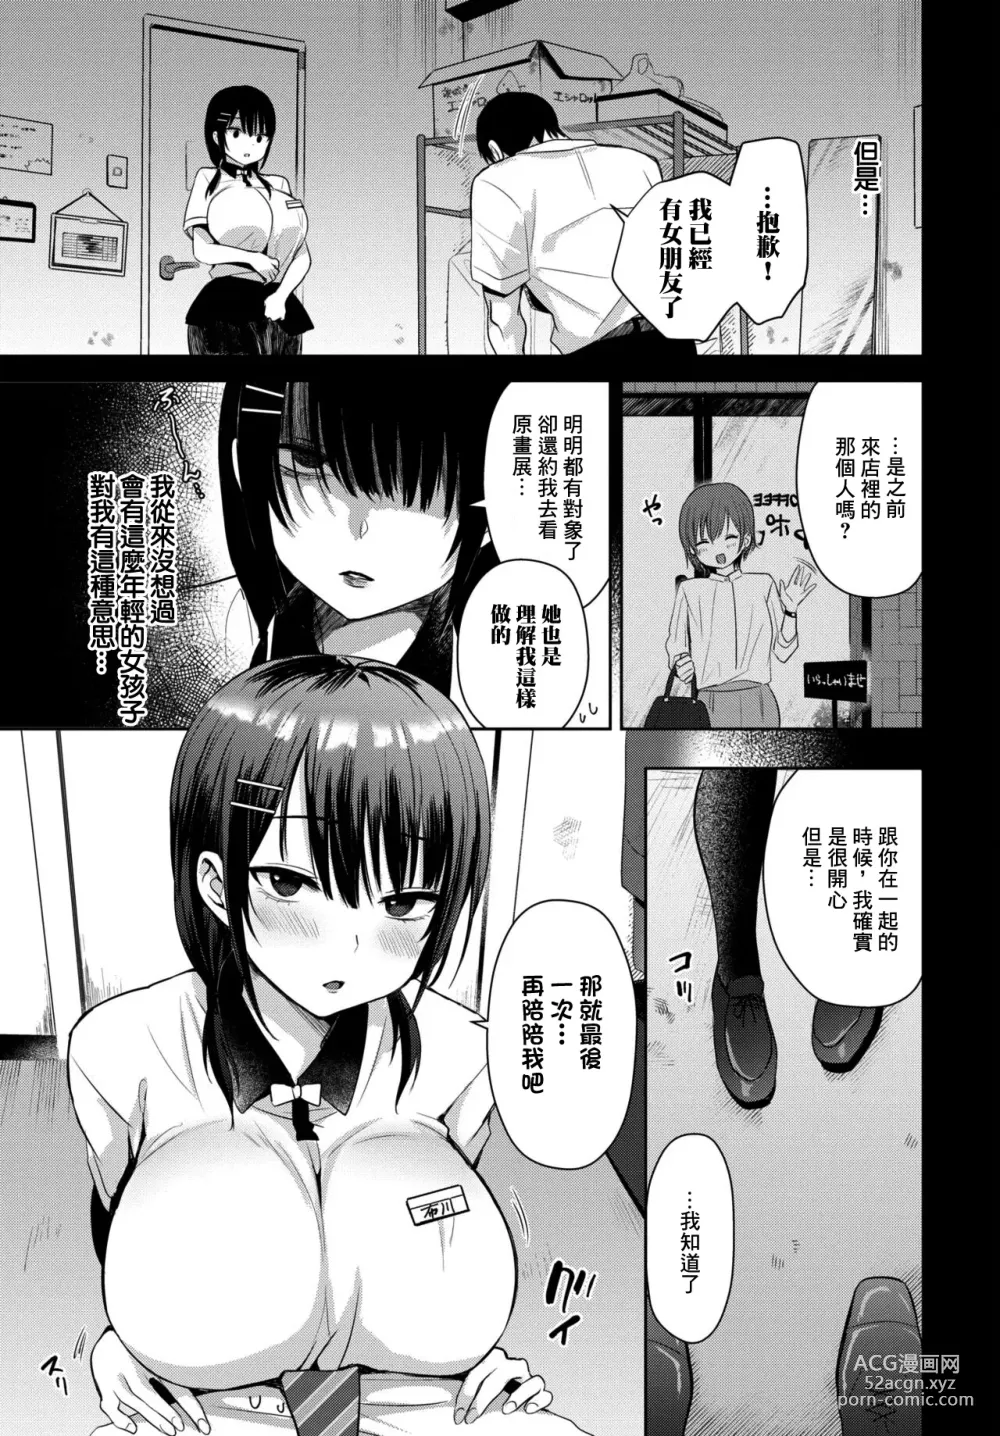 Page 3 of manga Furaretori